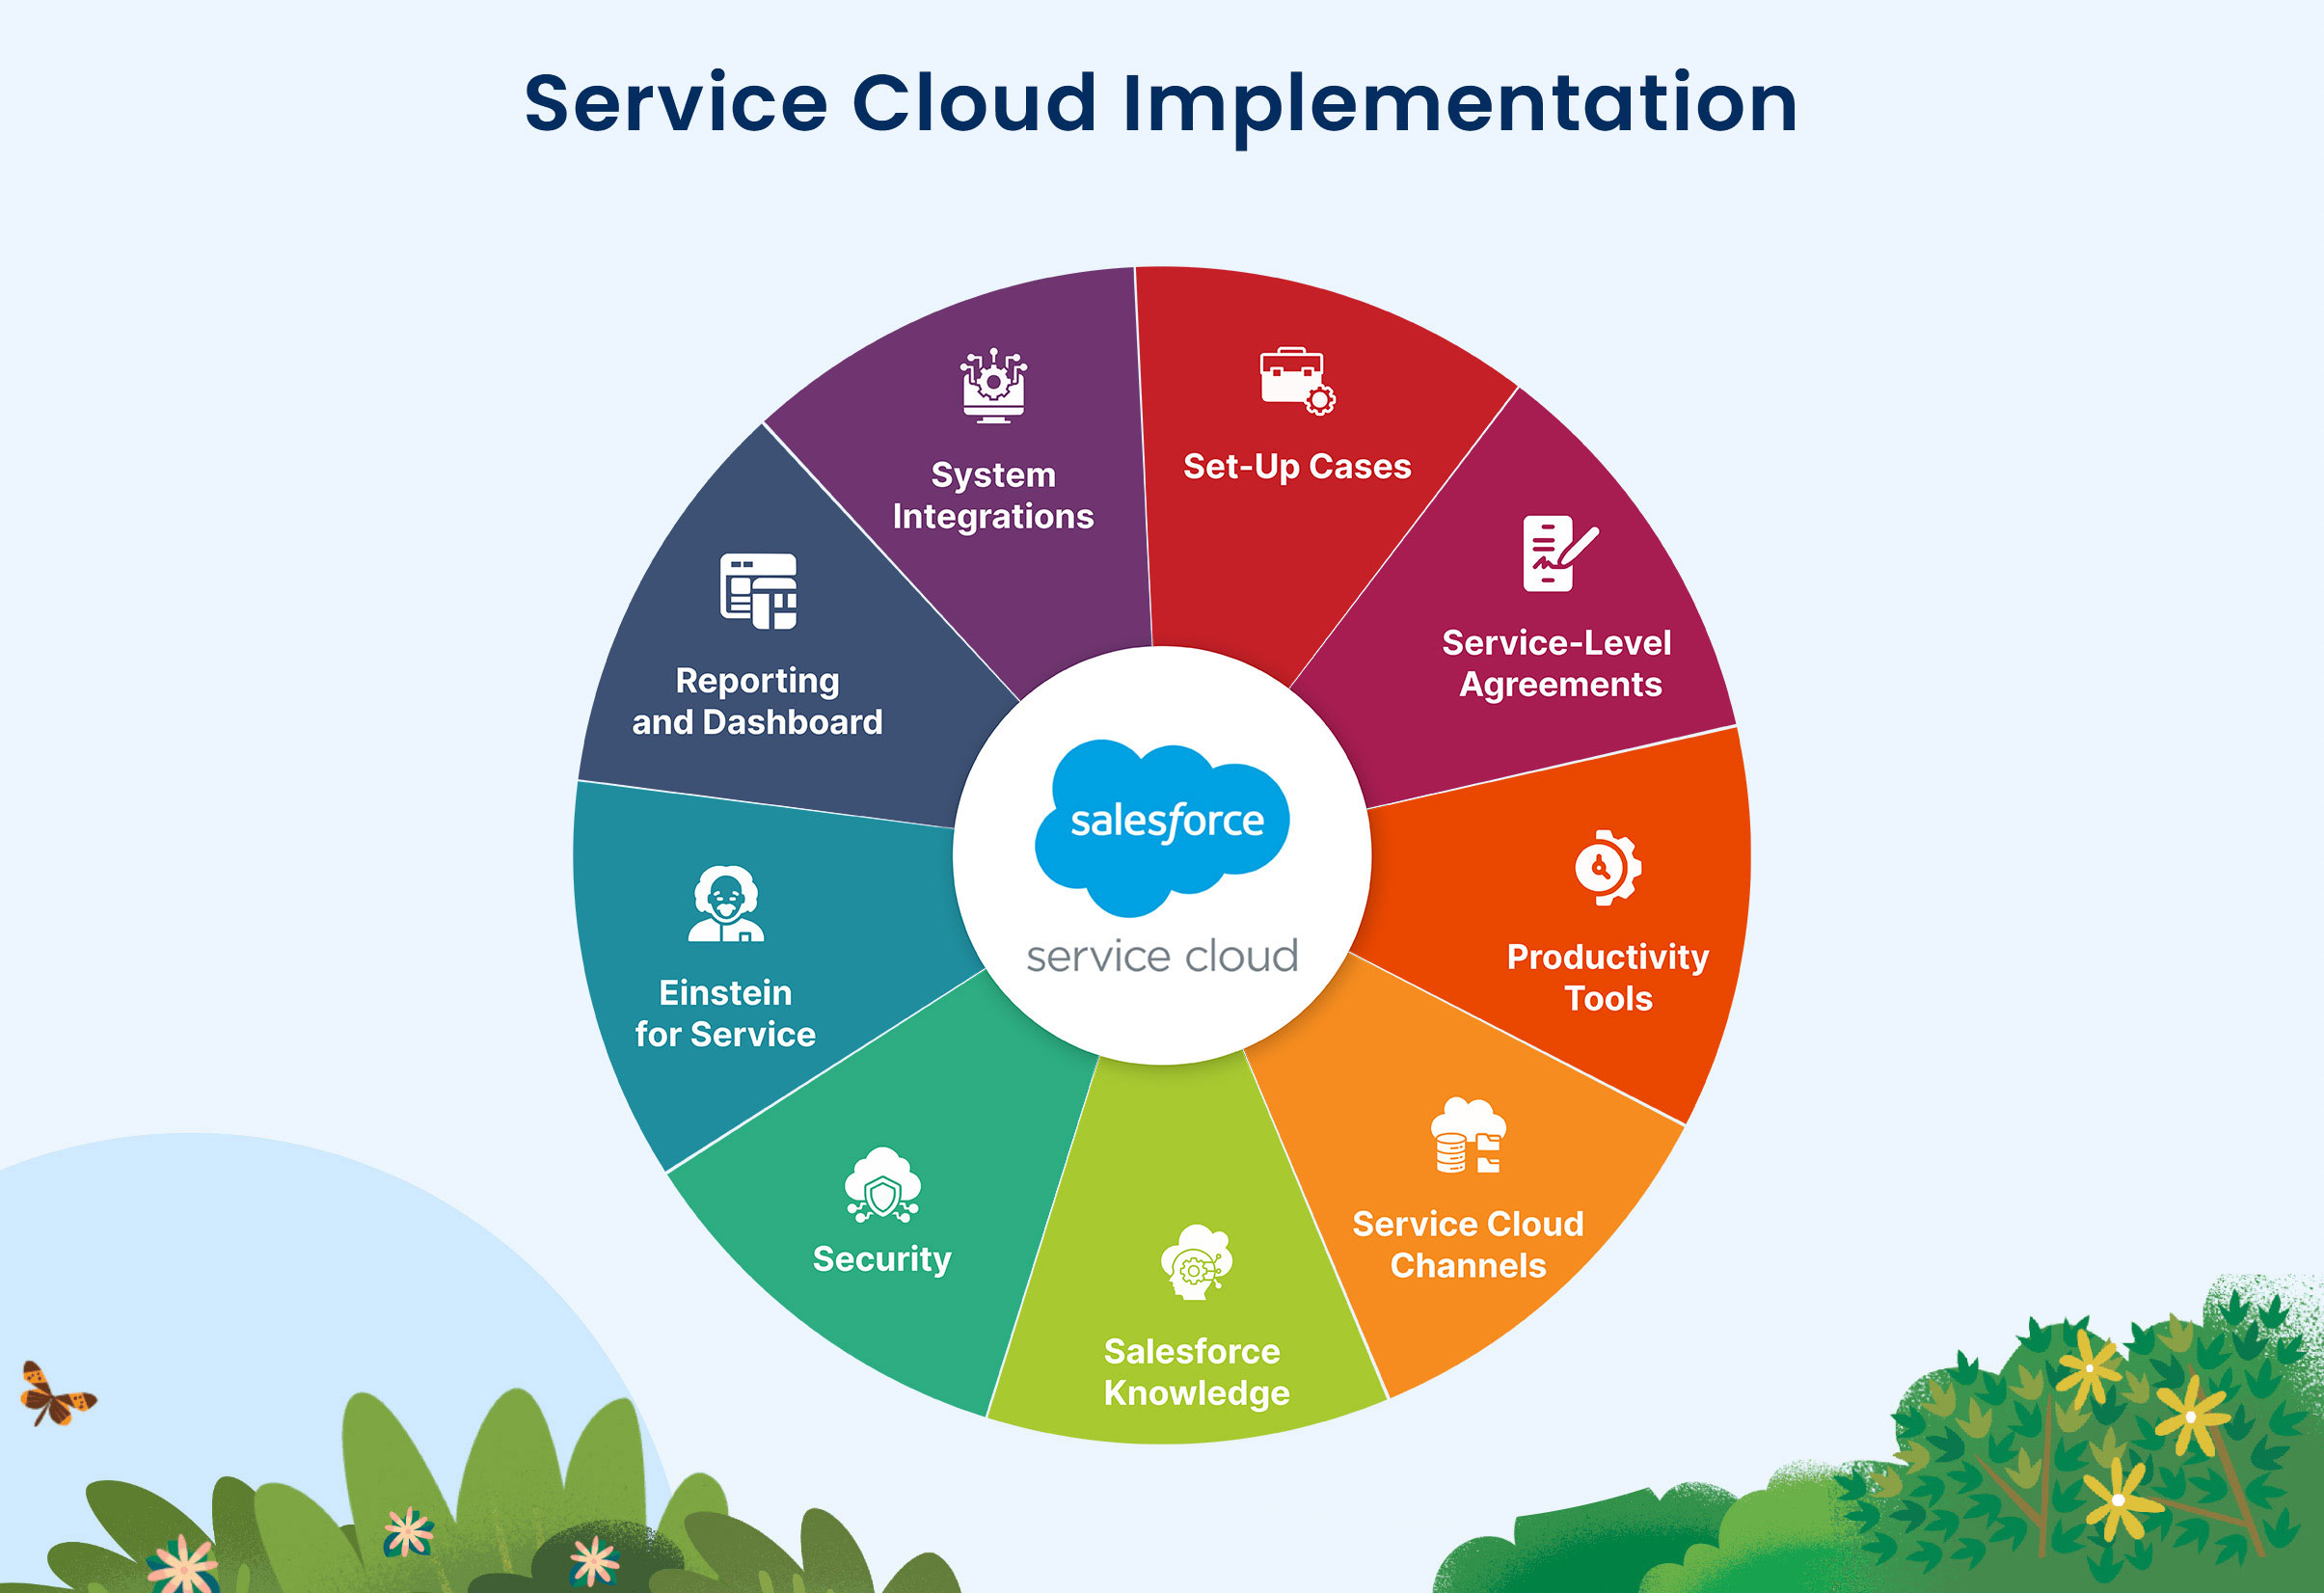 Service Cloud Implementation Service providing Salesforce Partner in Tamil Nadu, India. 